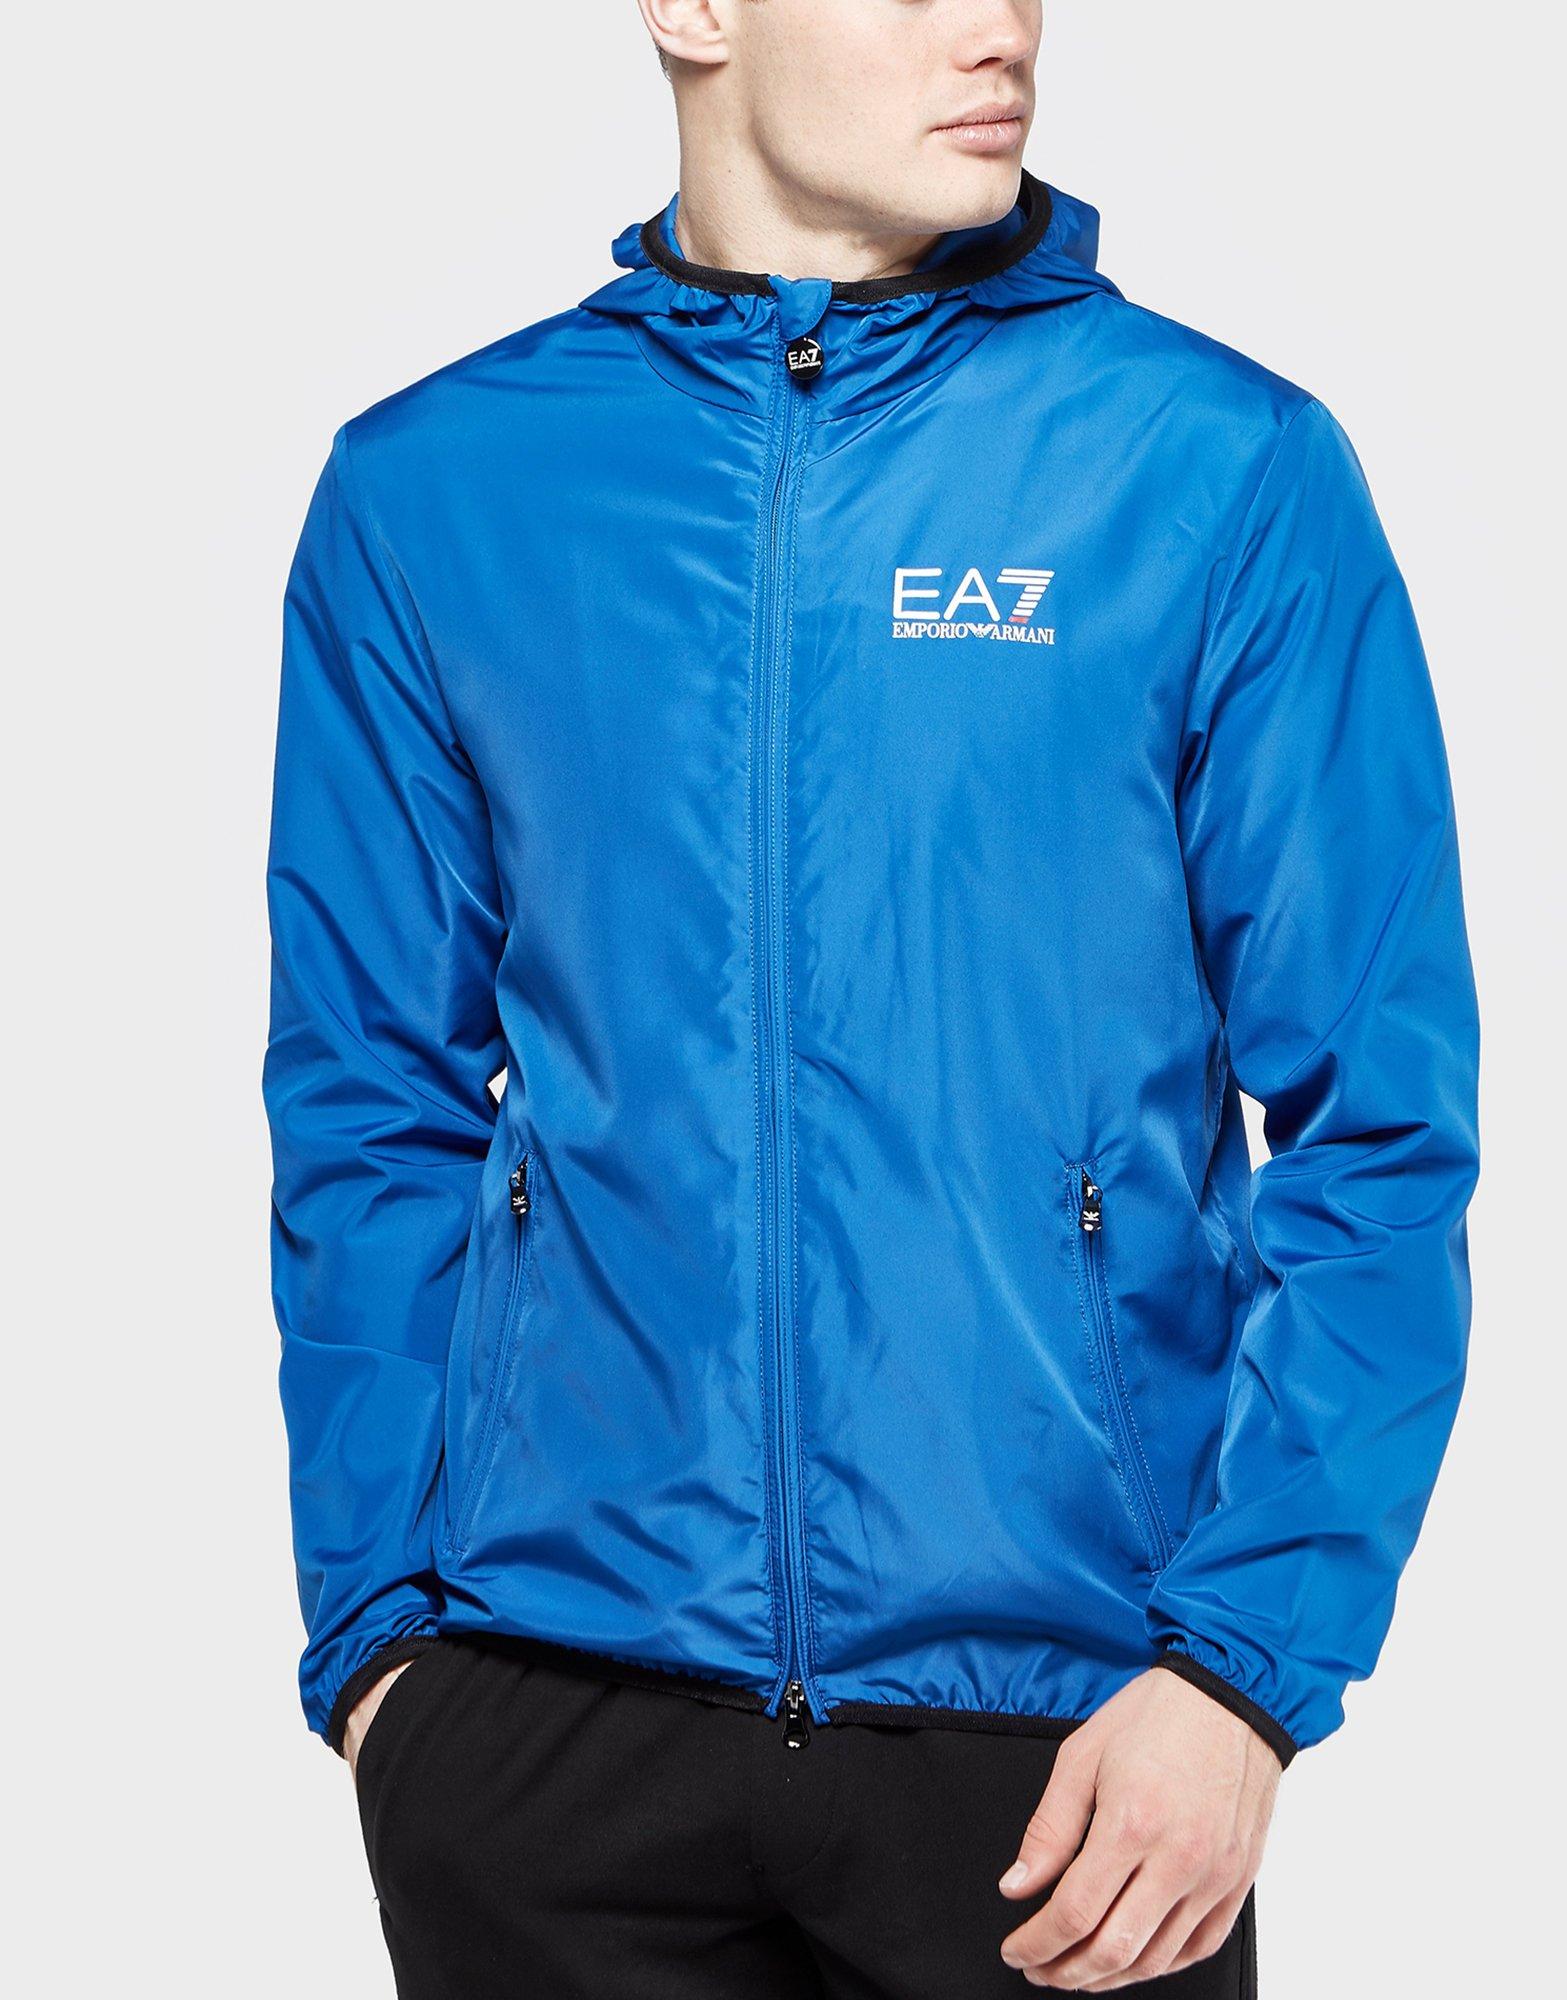 emporio armani ea7 core lightweight jacket